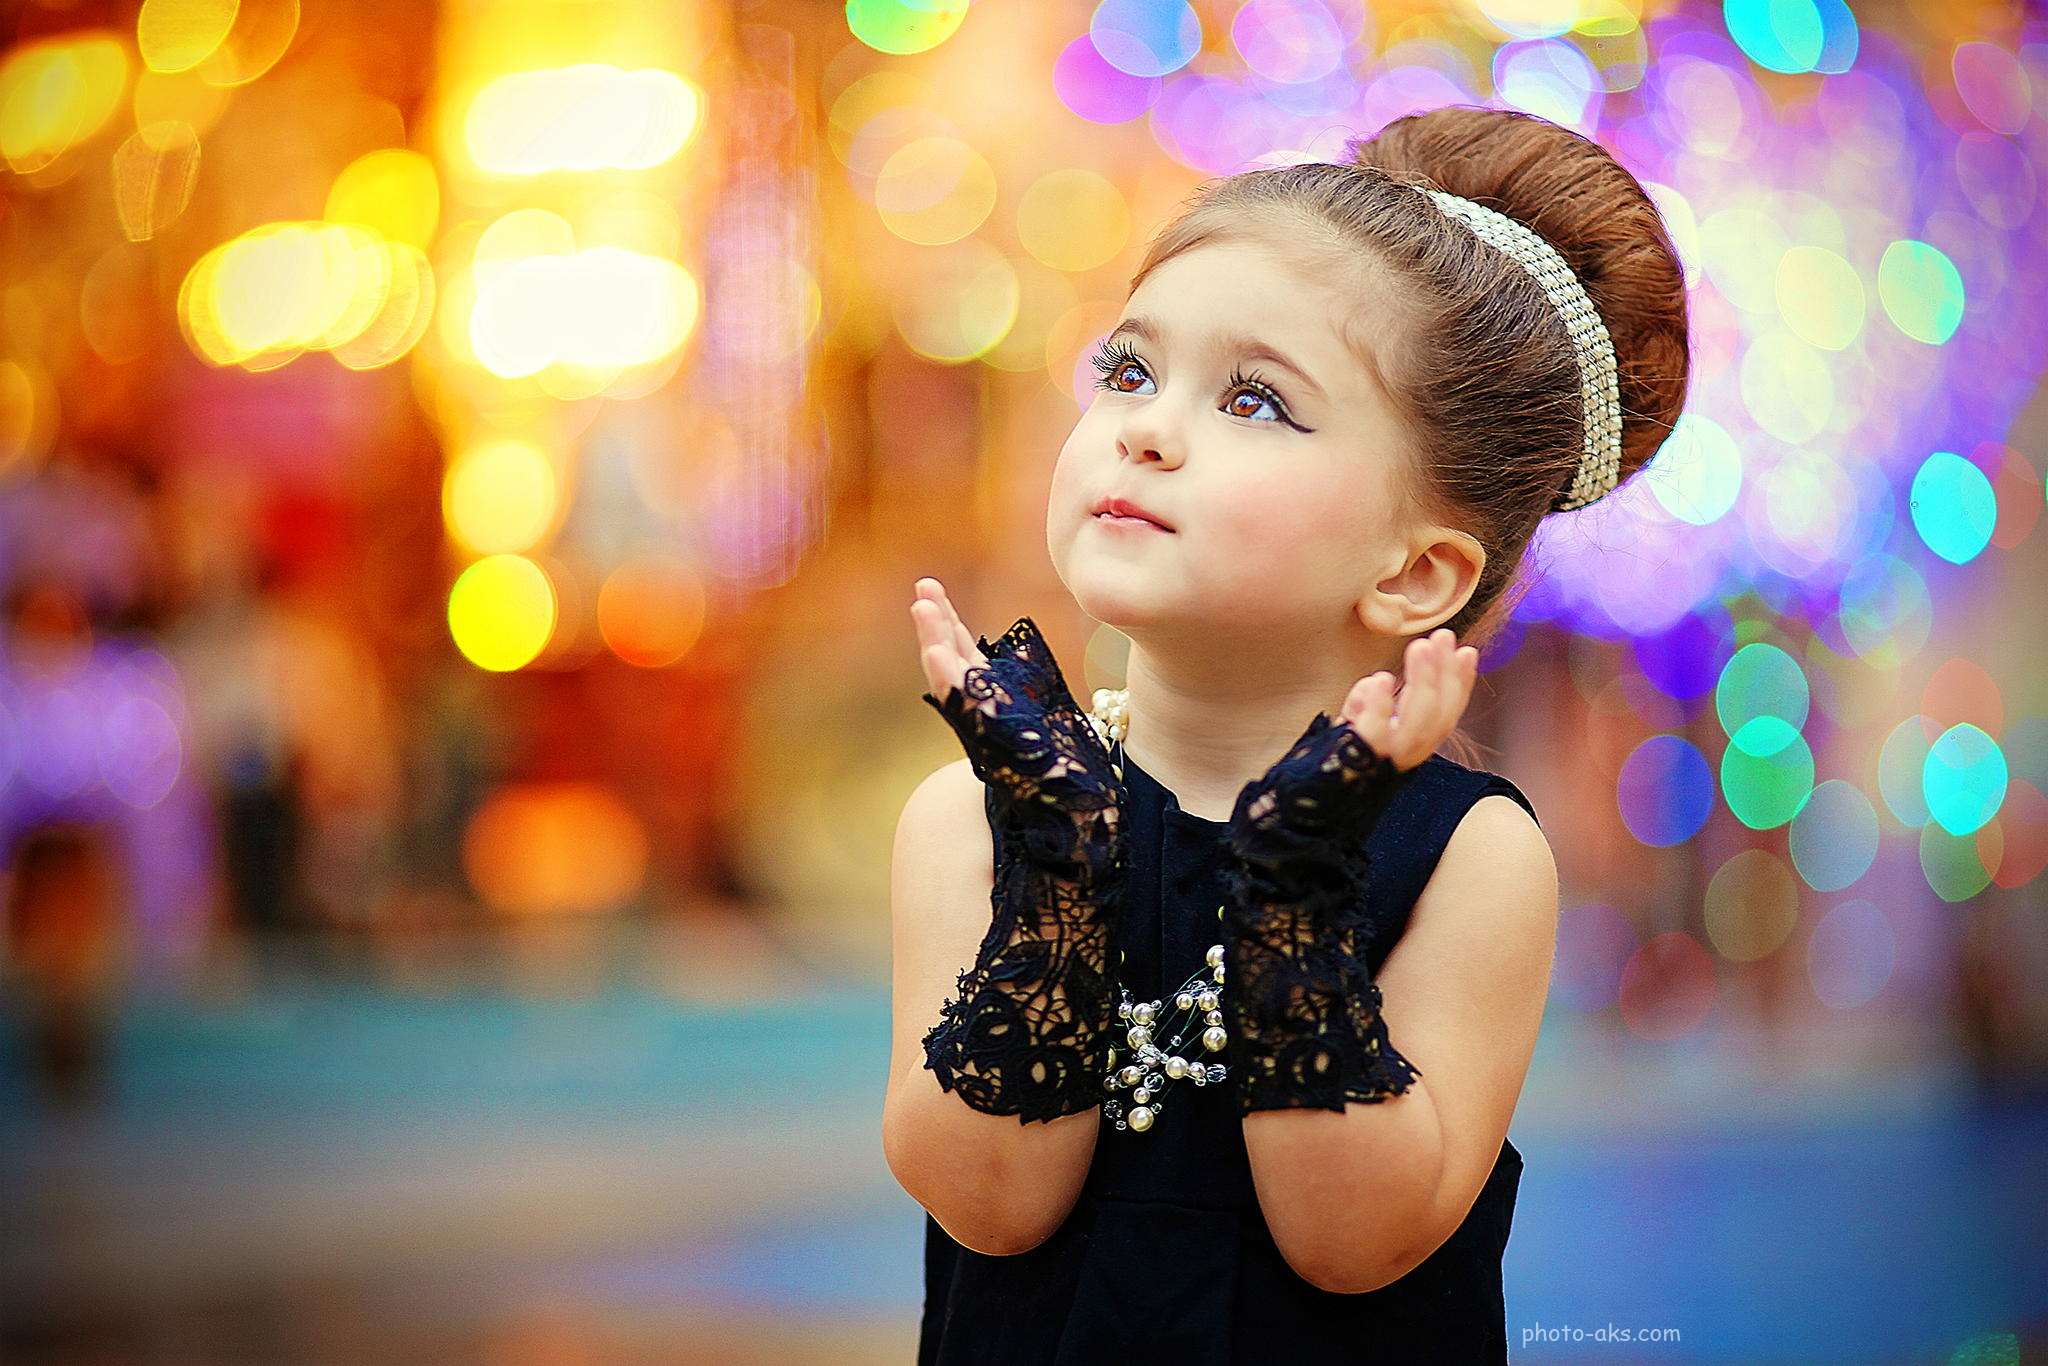 http://pic.photo-aks.com/photo/images/baby/large/beautiful_girl_kid.jpg